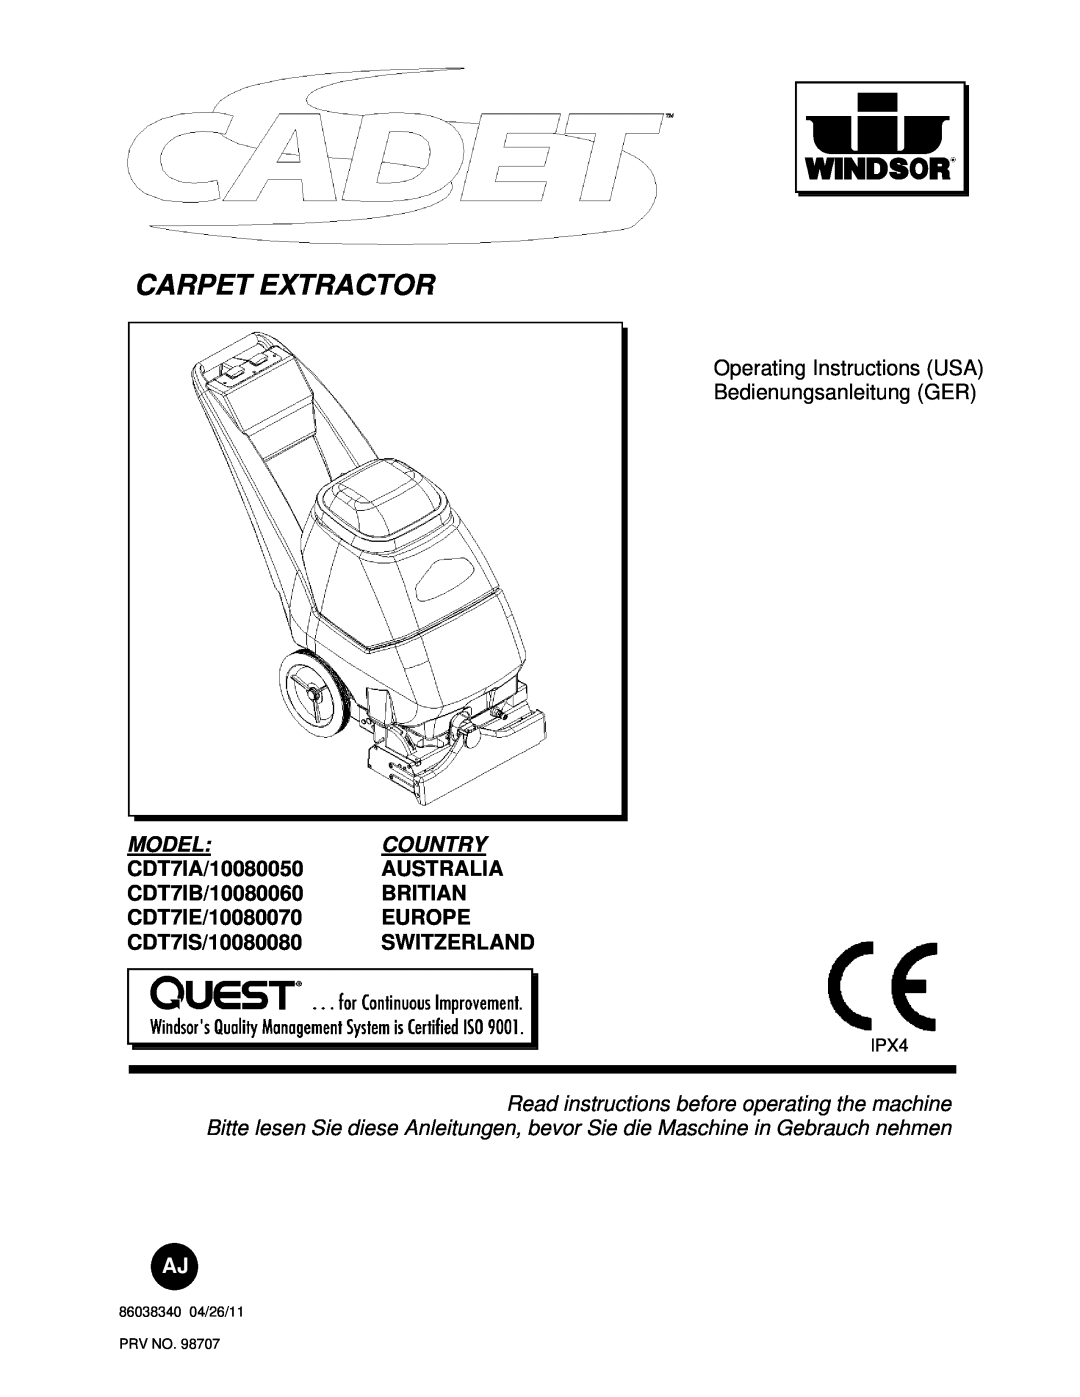 Windsor CDT7IE/10080070 manual Carpet Extractor, Model Country, CDT7IA/10080050 AUSTRALIA CDT7IB/10080060 BRITIAN 